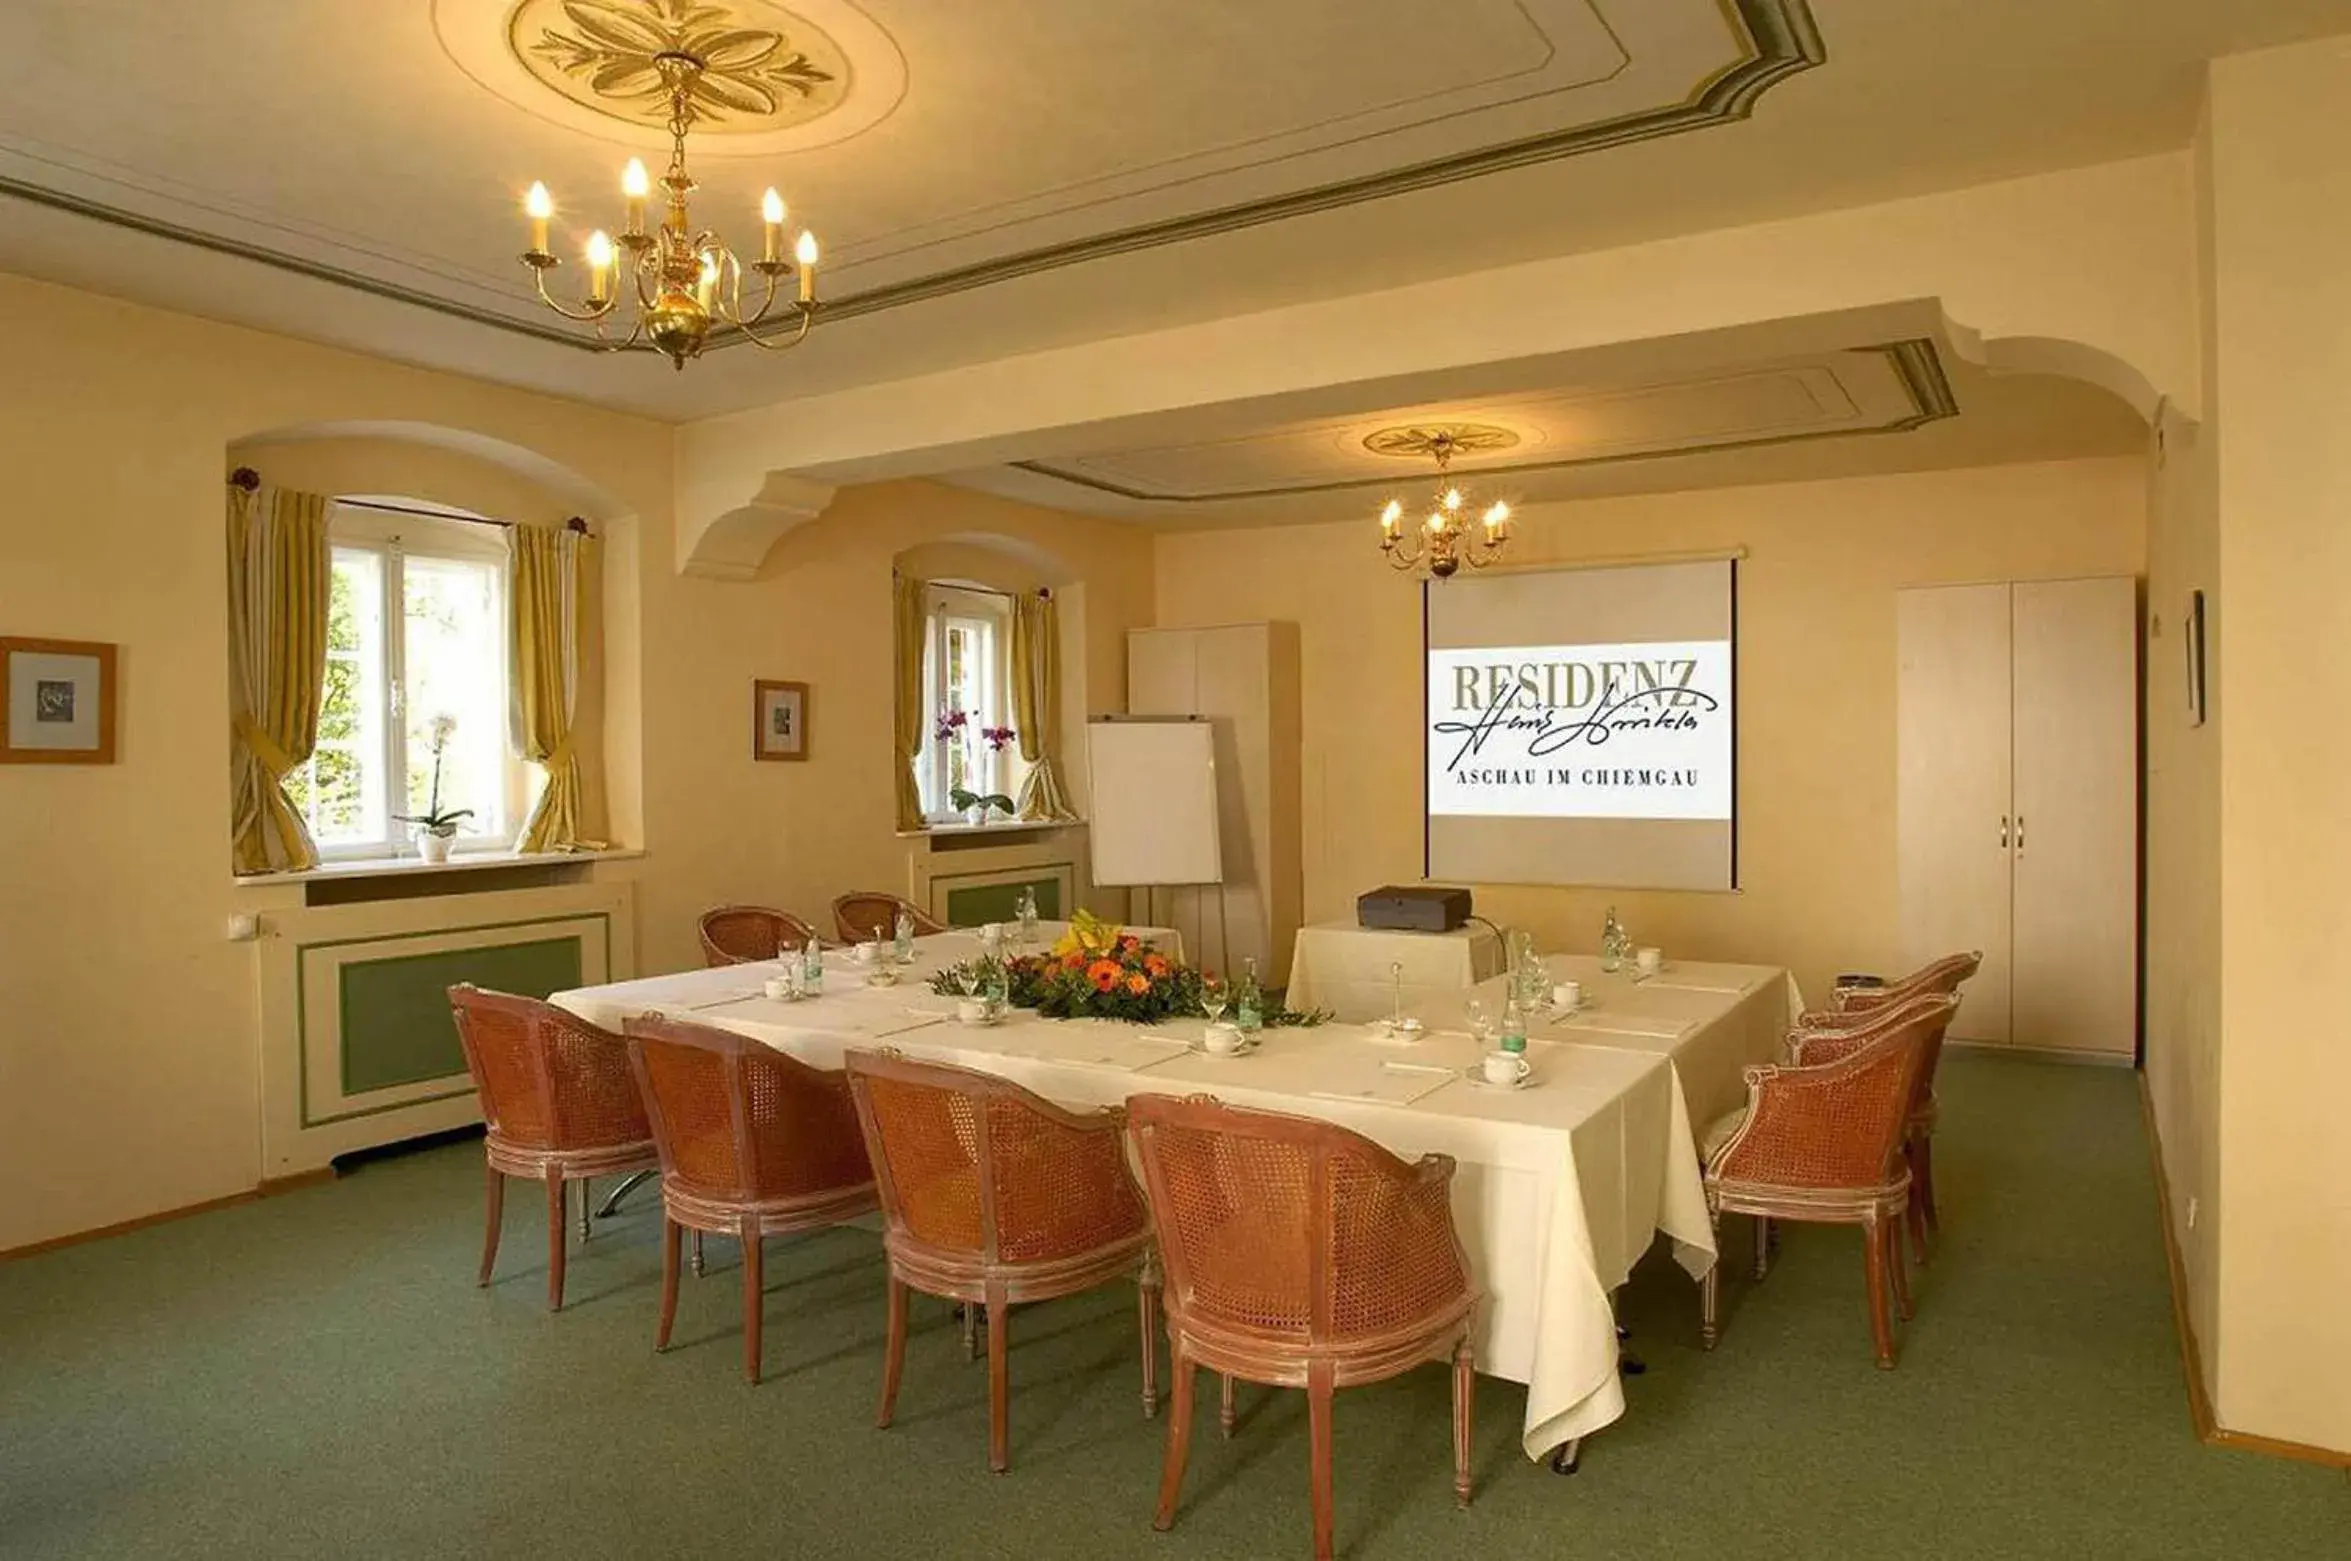 Meeting/conference room in Residenz Heinz Winkler